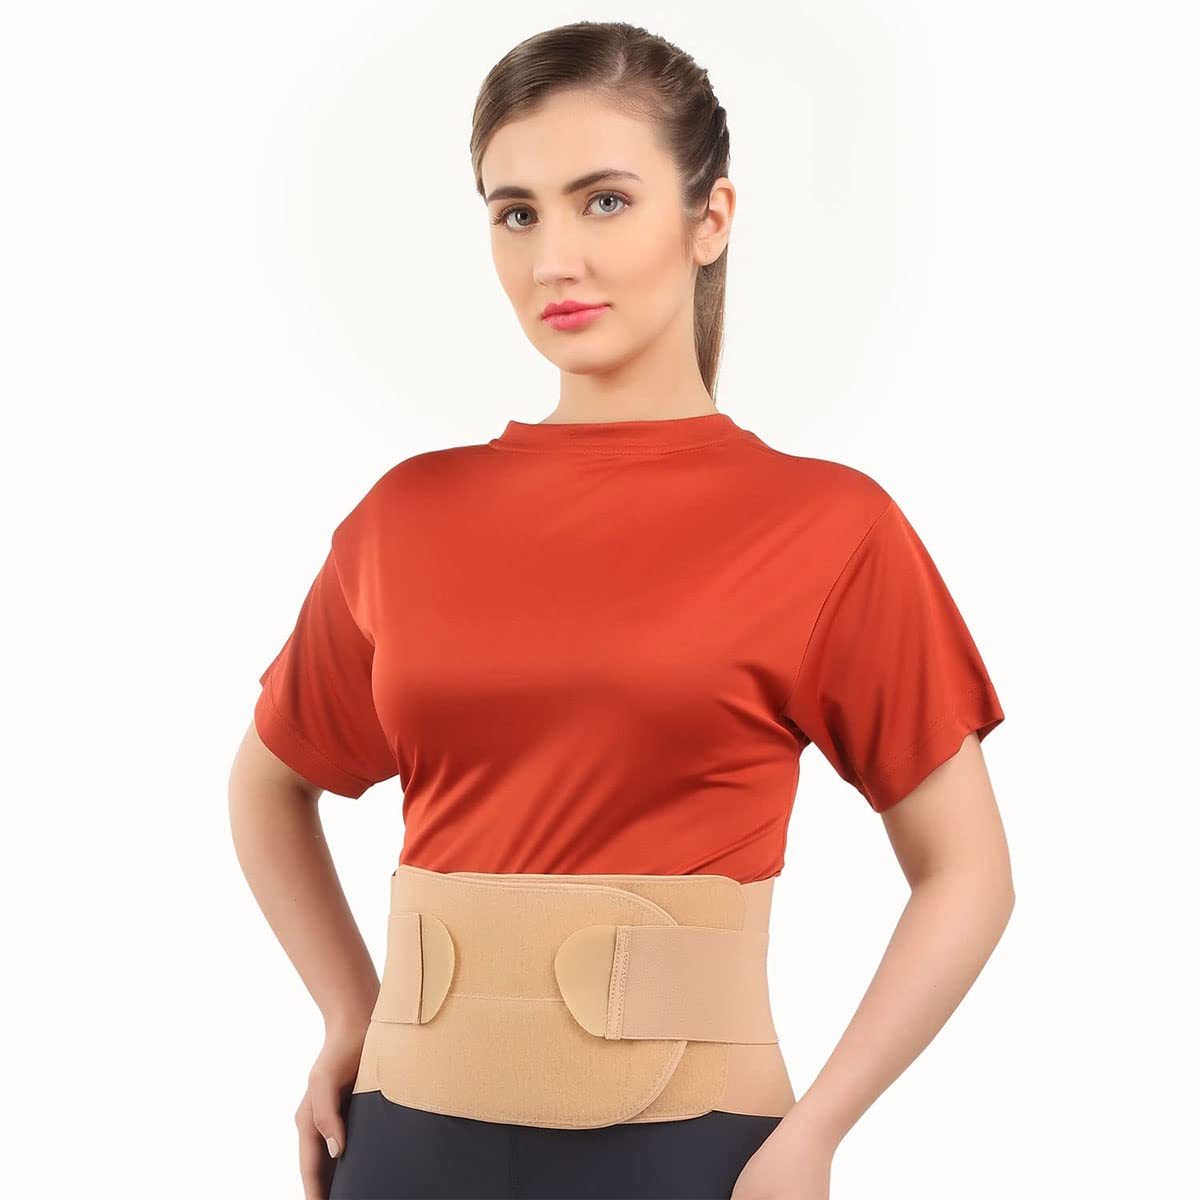 Lumbar Support Waist belt for Back Pain Relief buy onlie